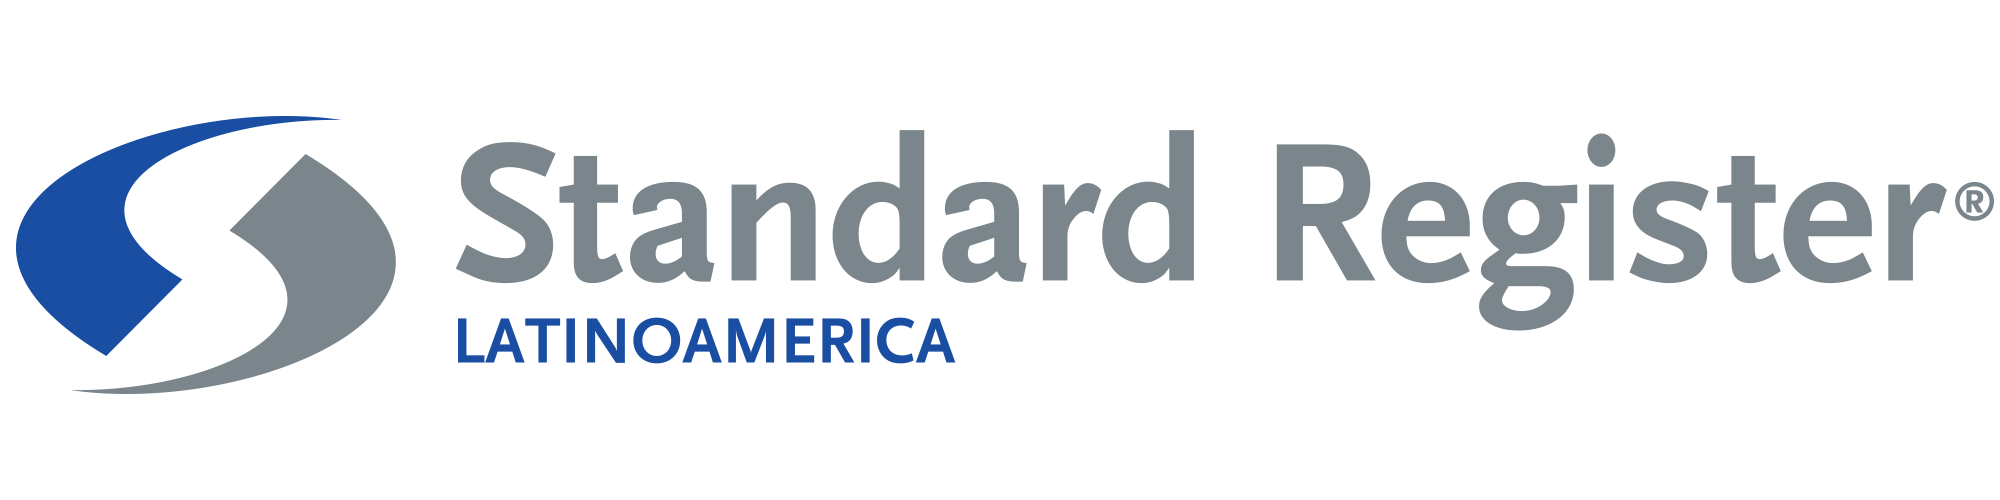 Standard Register Latinoamérica